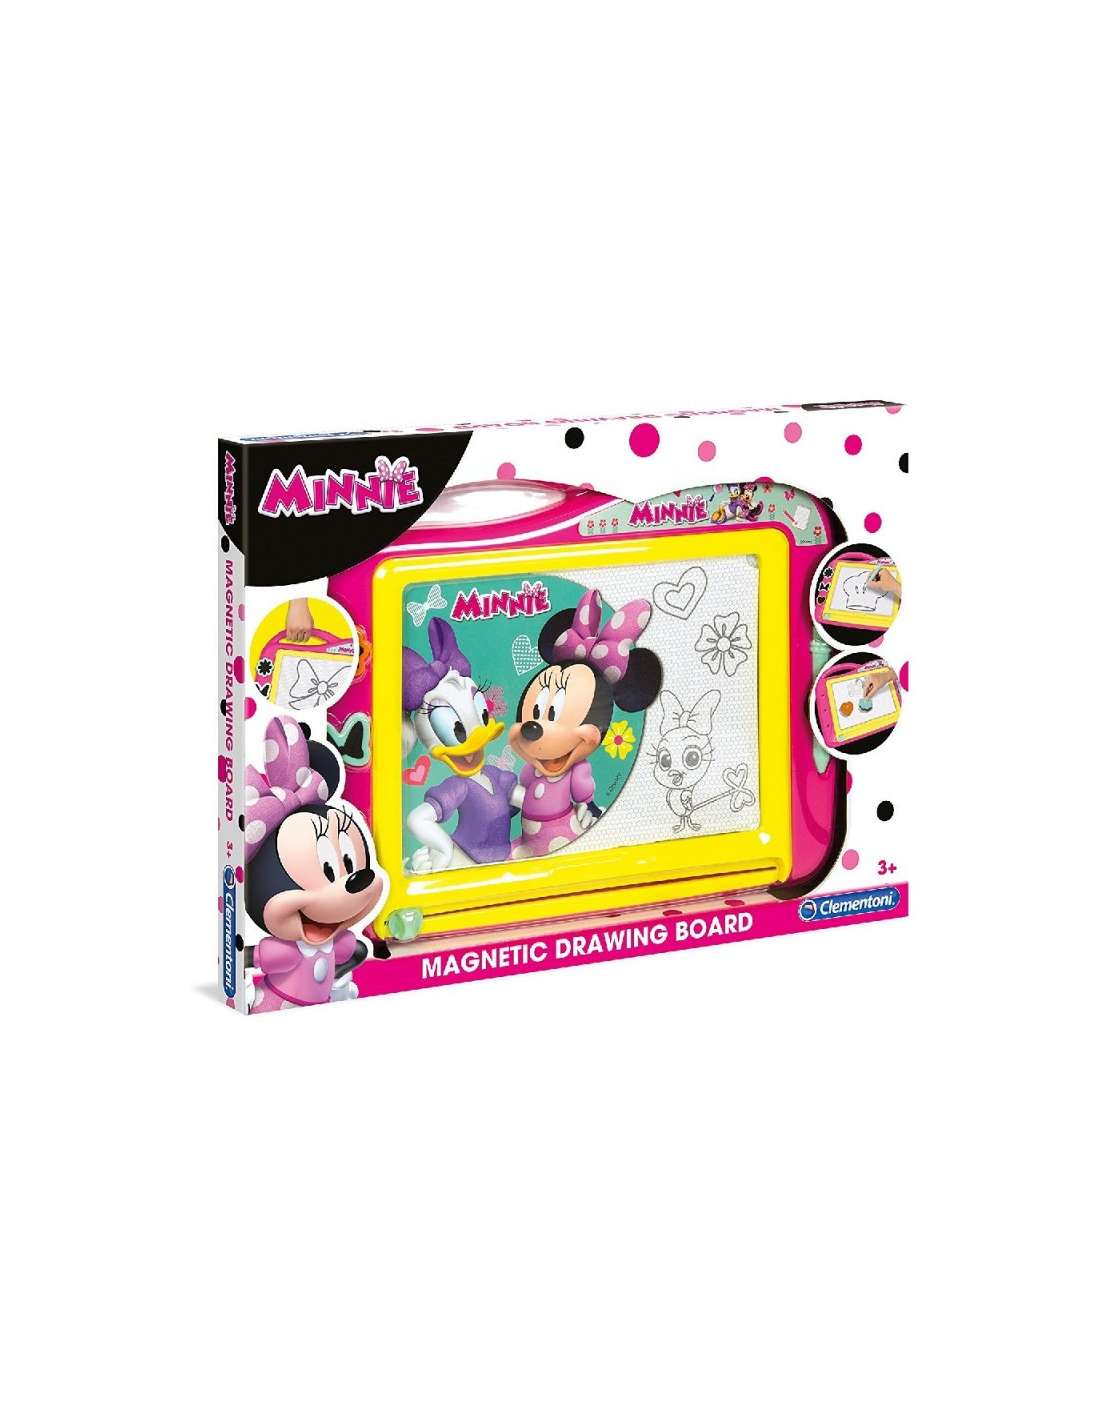 Pizarra infantil de Minnie Mouse 53019, MINNIE CHICOS